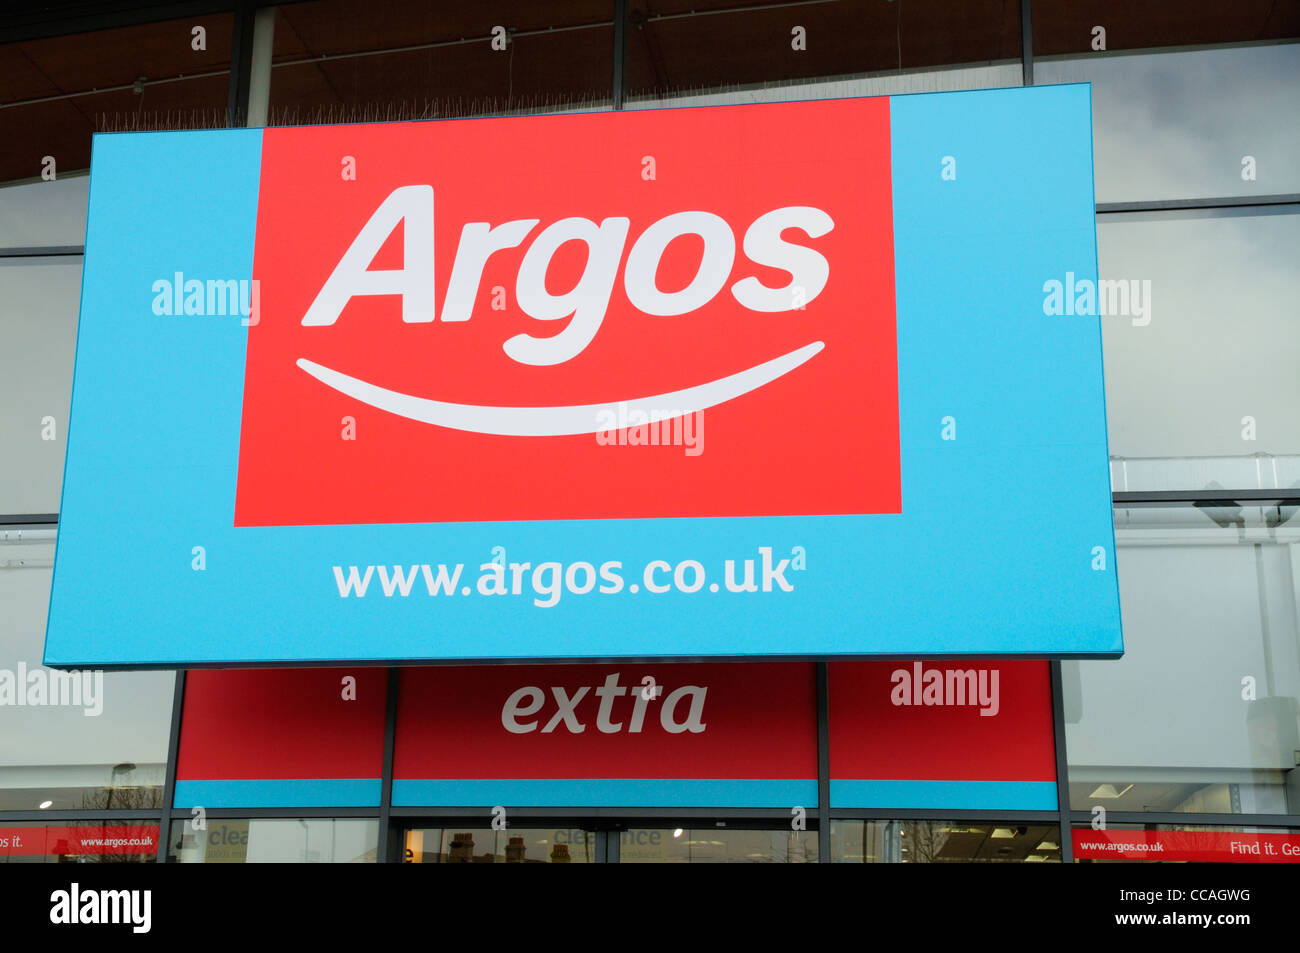 Argos Extra Shop Sign, Cambridge, England, UK Stock Photo